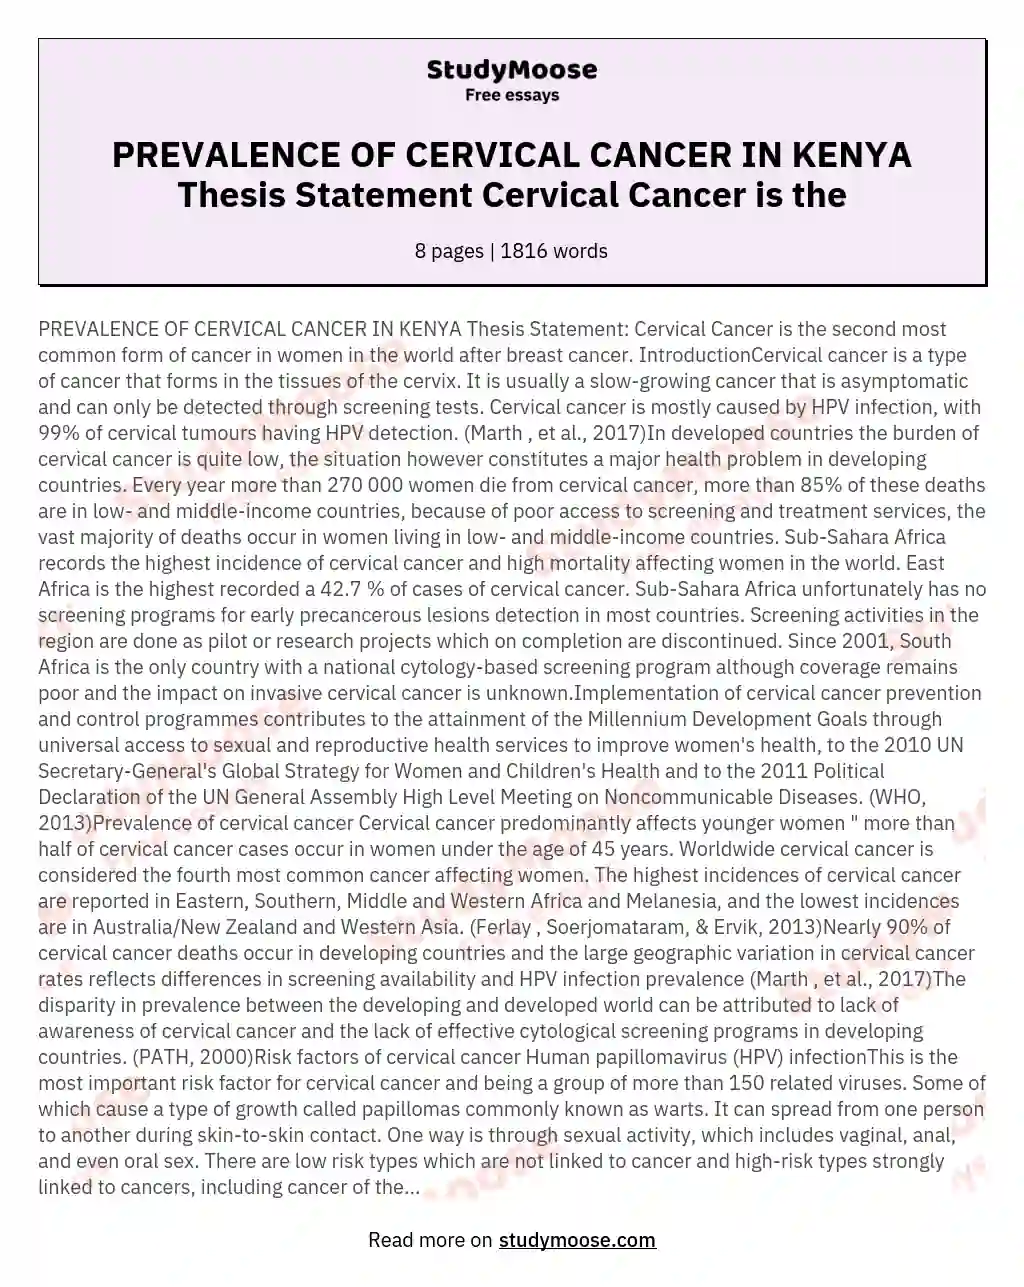 essay about cervical cancer